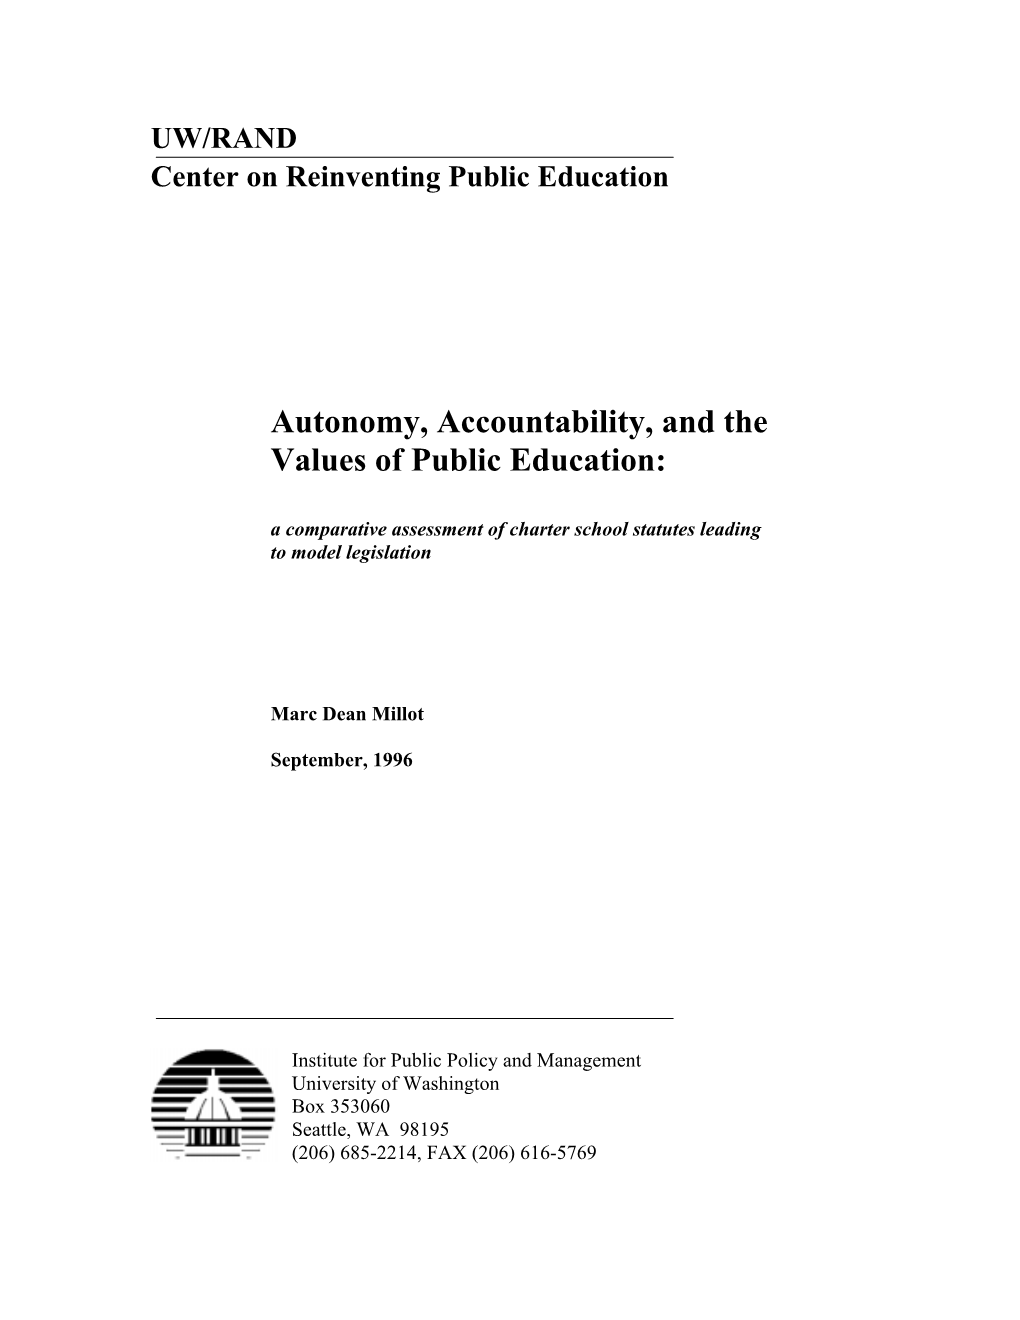 Autonomy, Accountability, and the Values of Public Education